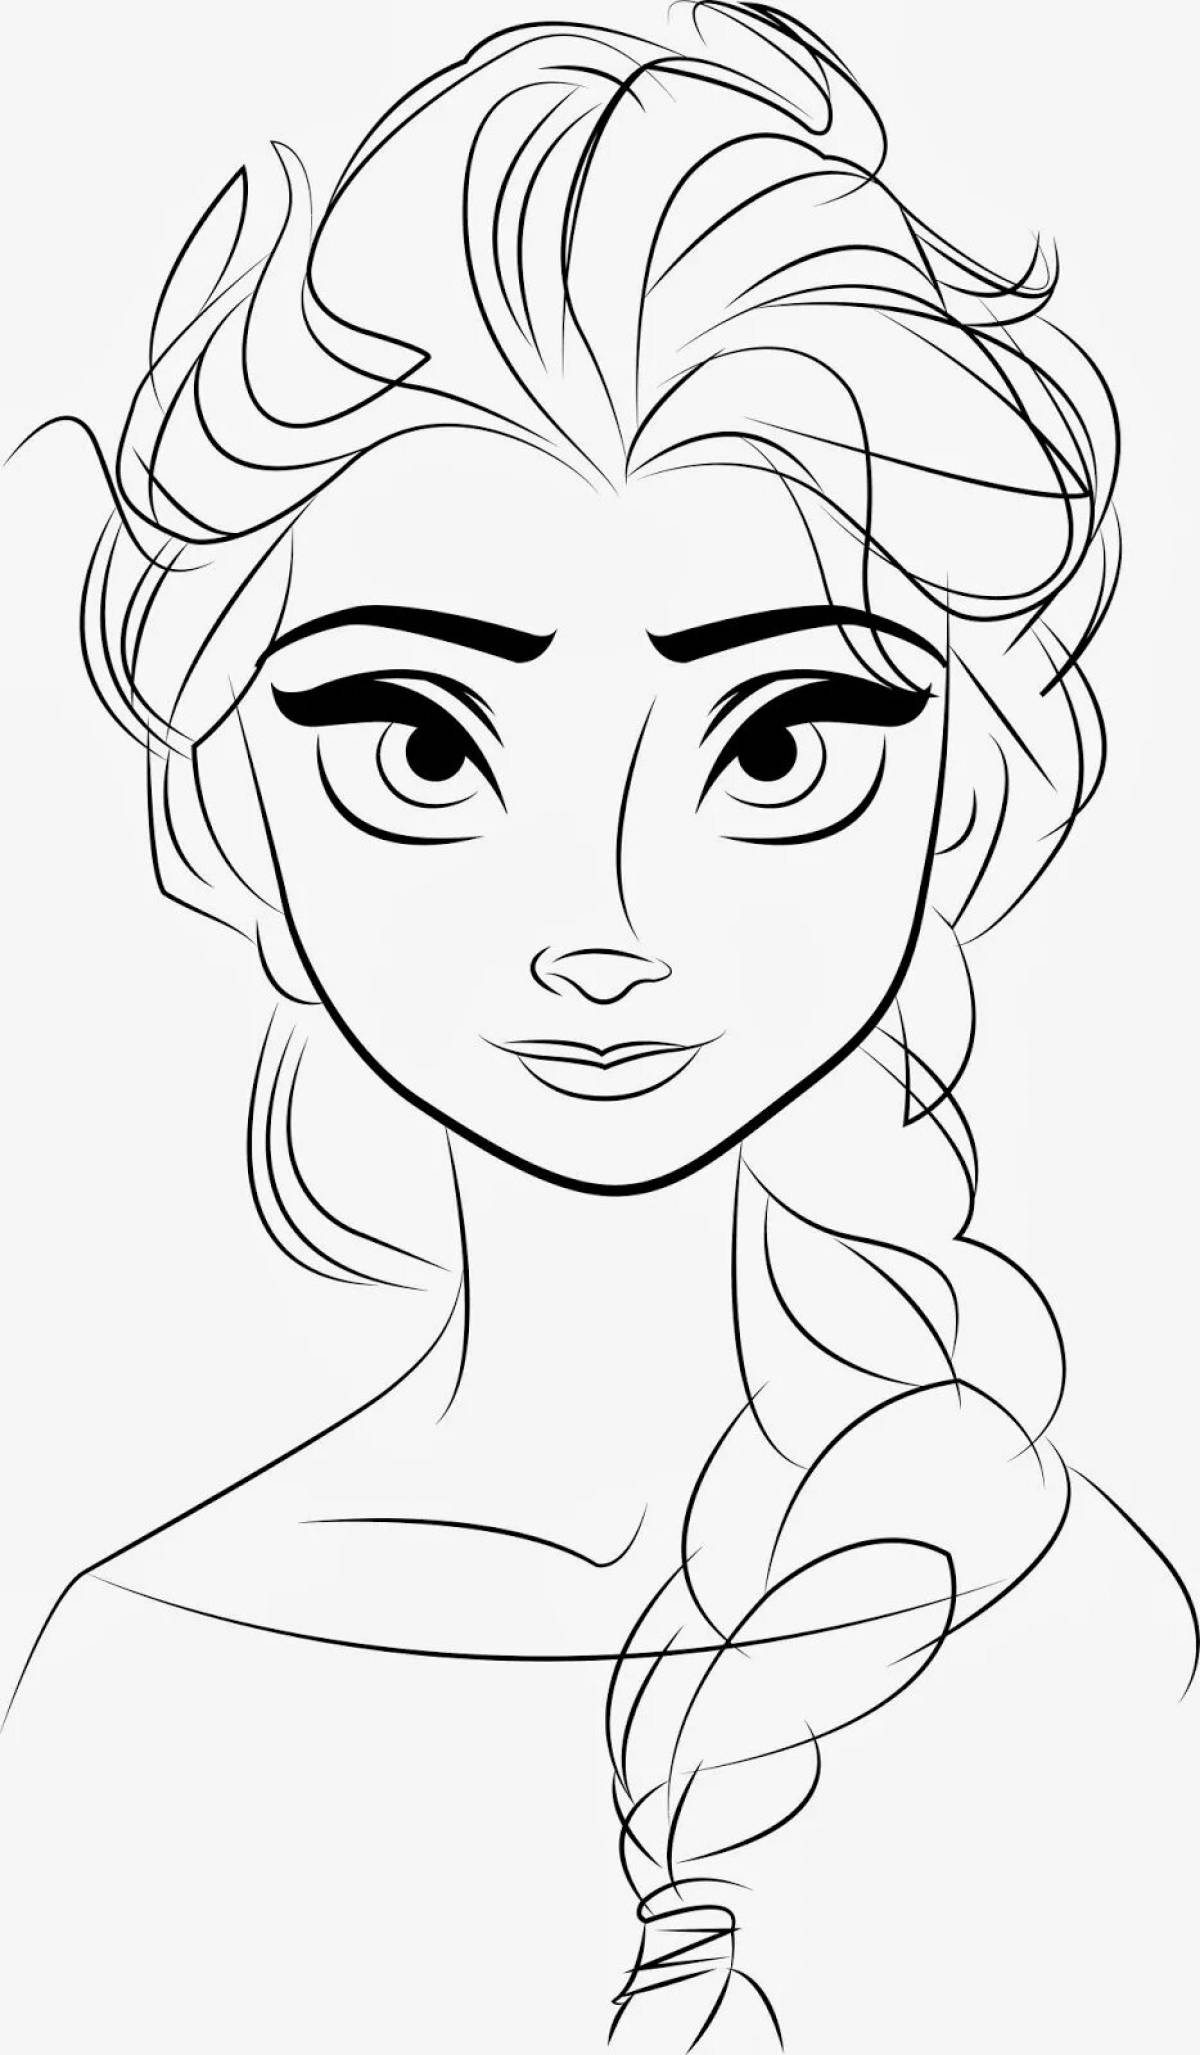 Elsa's shining face coloring